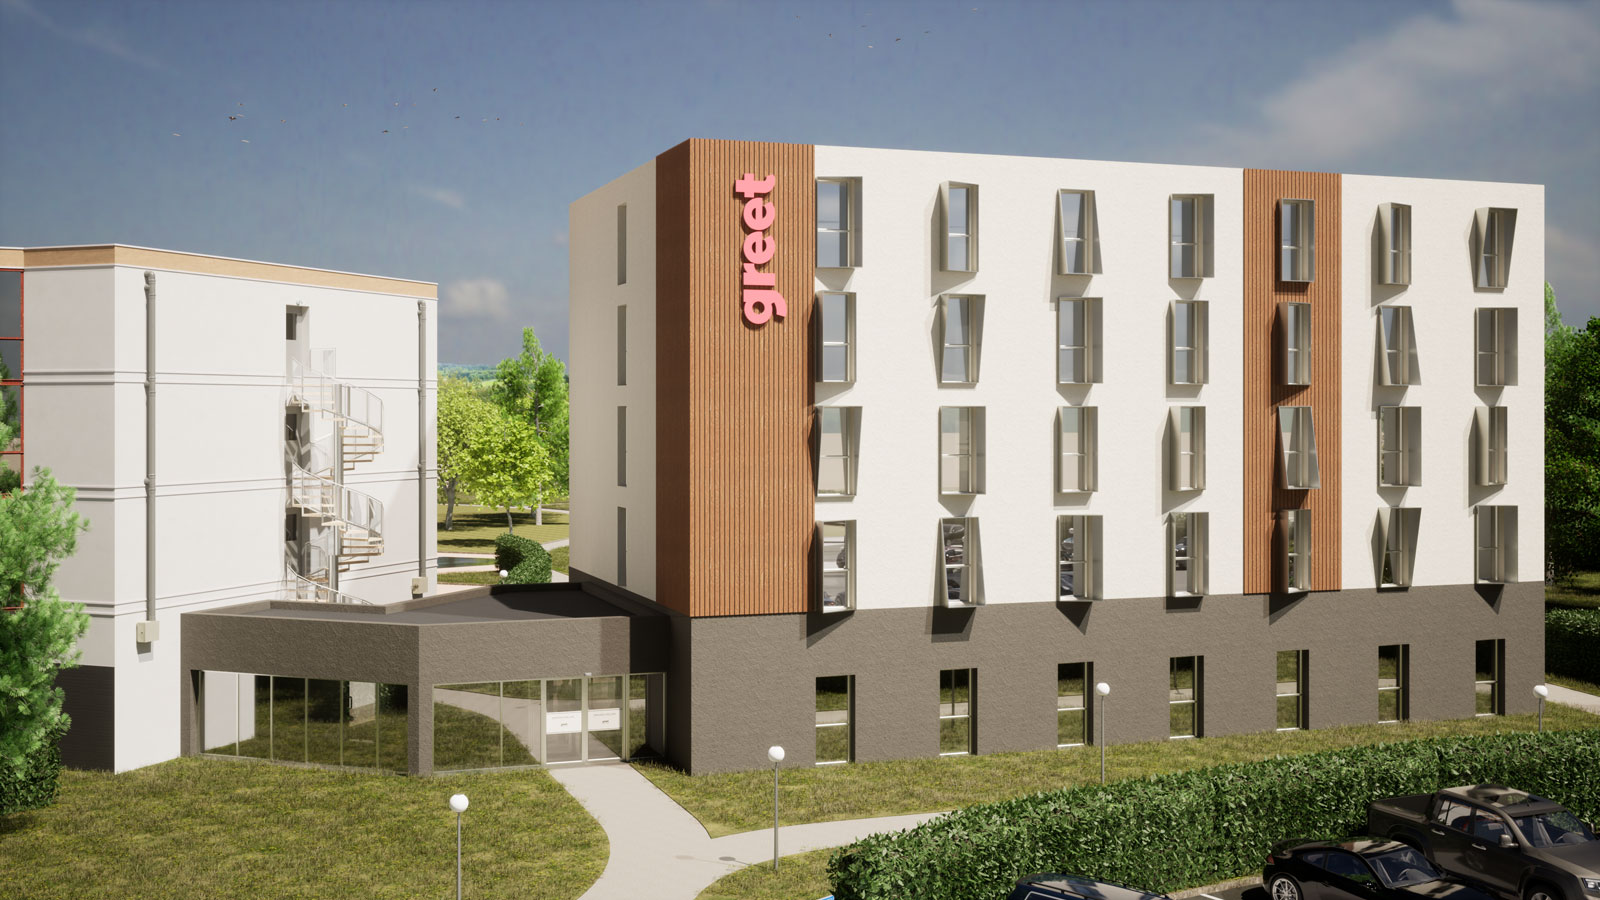 Construction-hotel-Greet-facades-blanches-bardage-bois-soubassement-noir-architecte-area-creatio-groupe-ameo